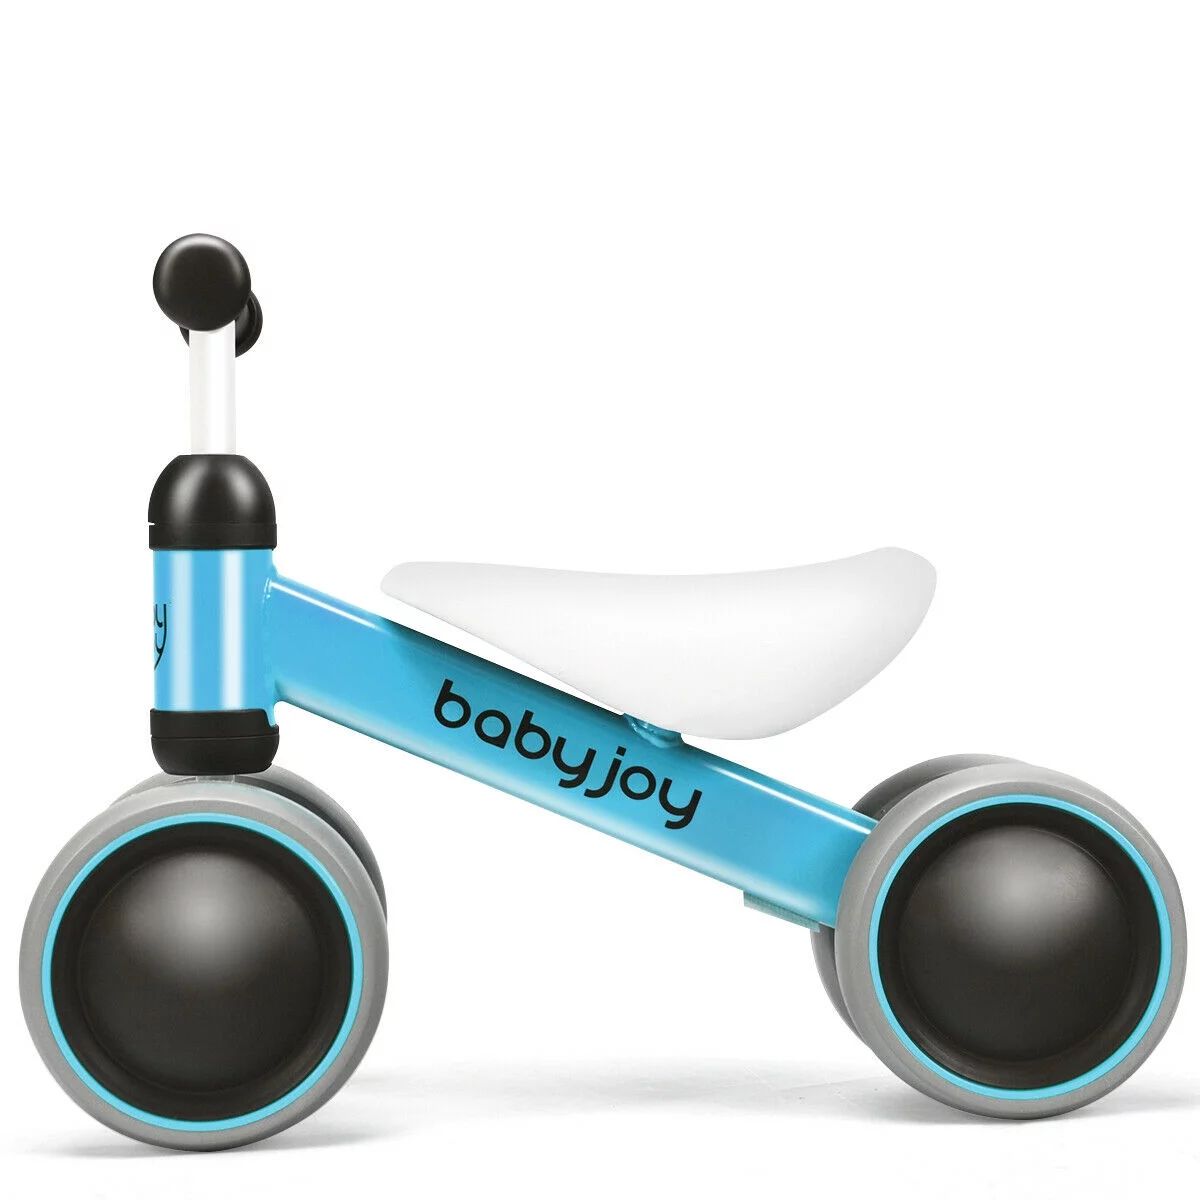 Babyjoy 4 Wheels Baby Balance Bike Children Walker No-Pedal Toddler Toys Rides Blue | Walmart (US)